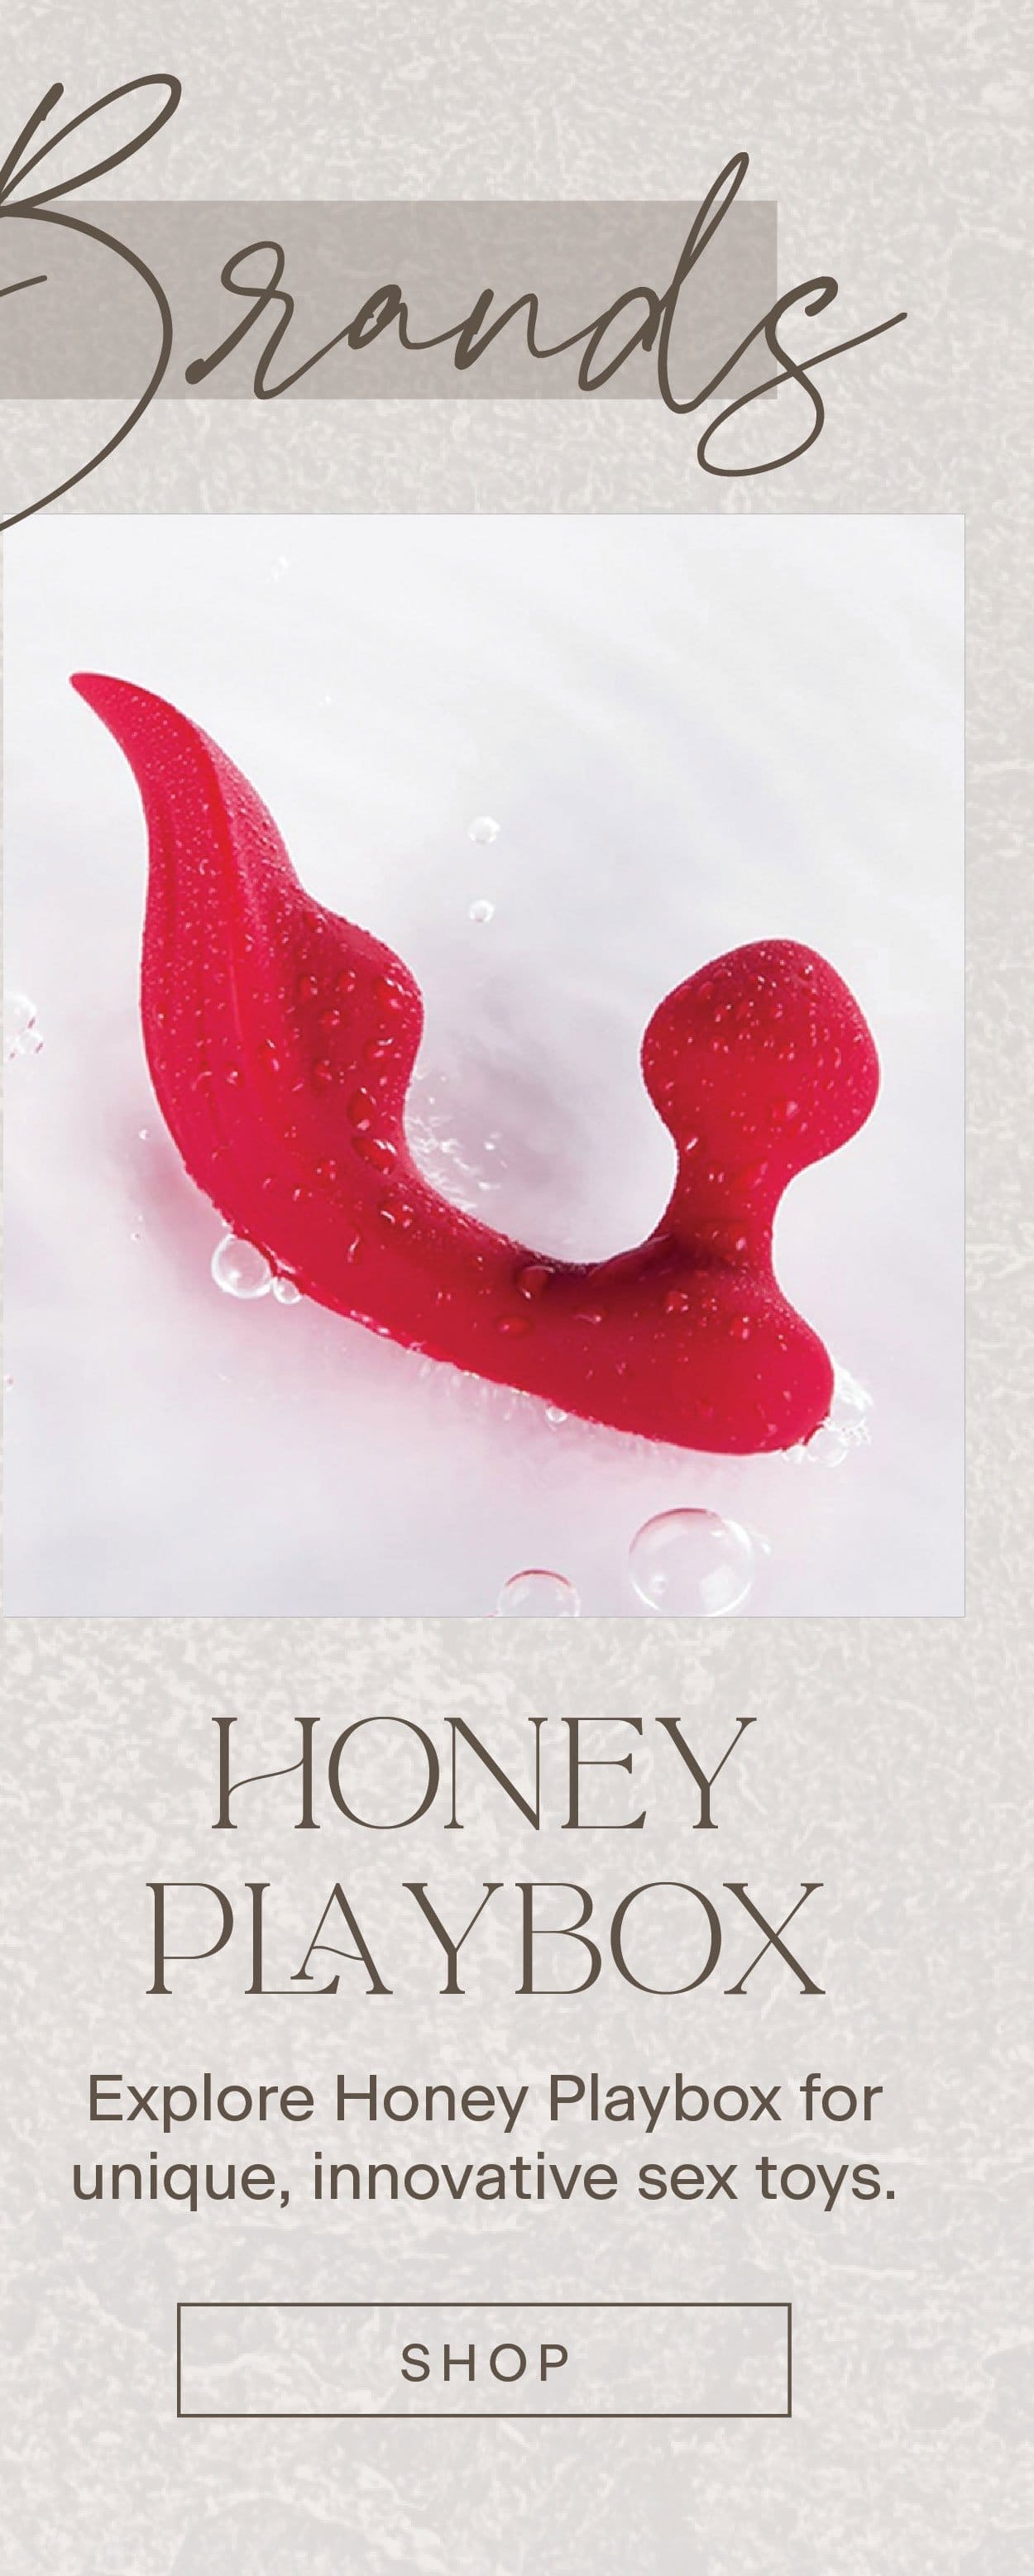 Honey Playbox – Explore Honey Playbox for unique, innovative sex toys.